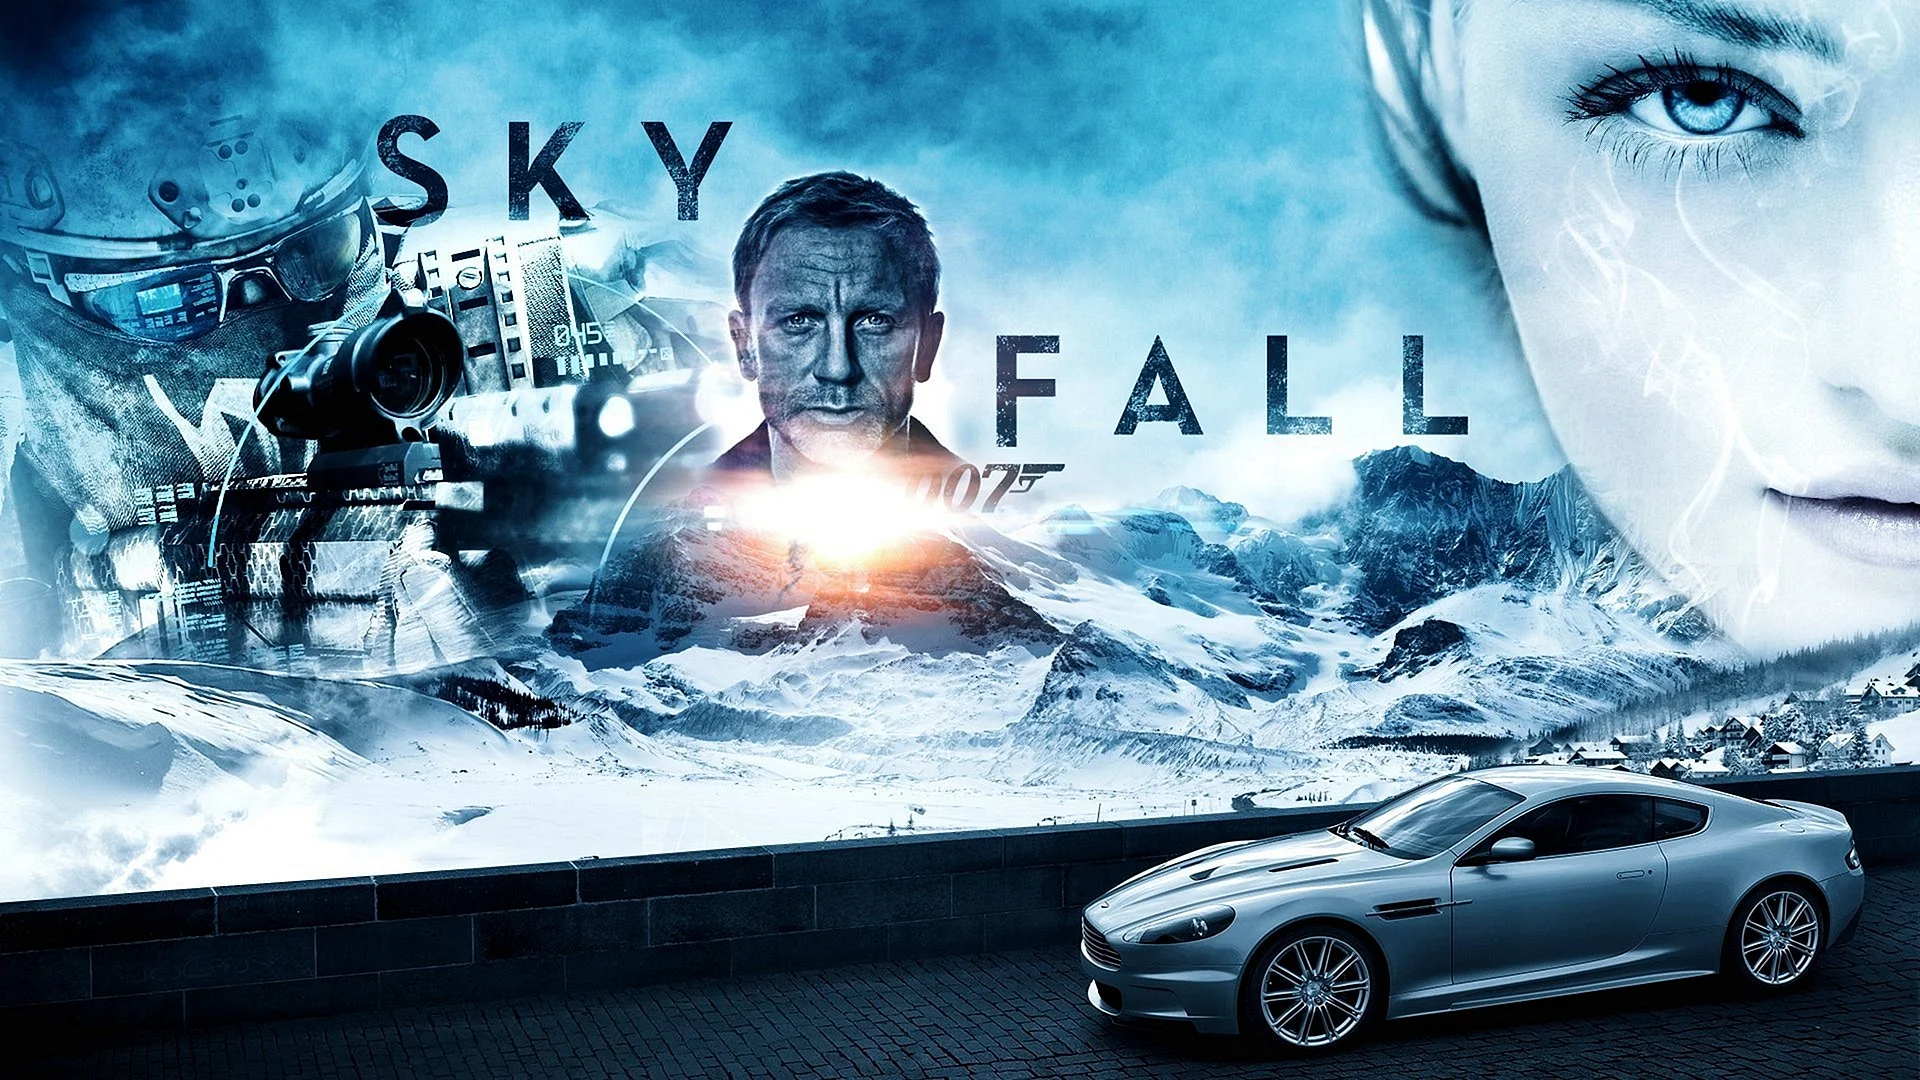 Skyfall 007 Wallpaper